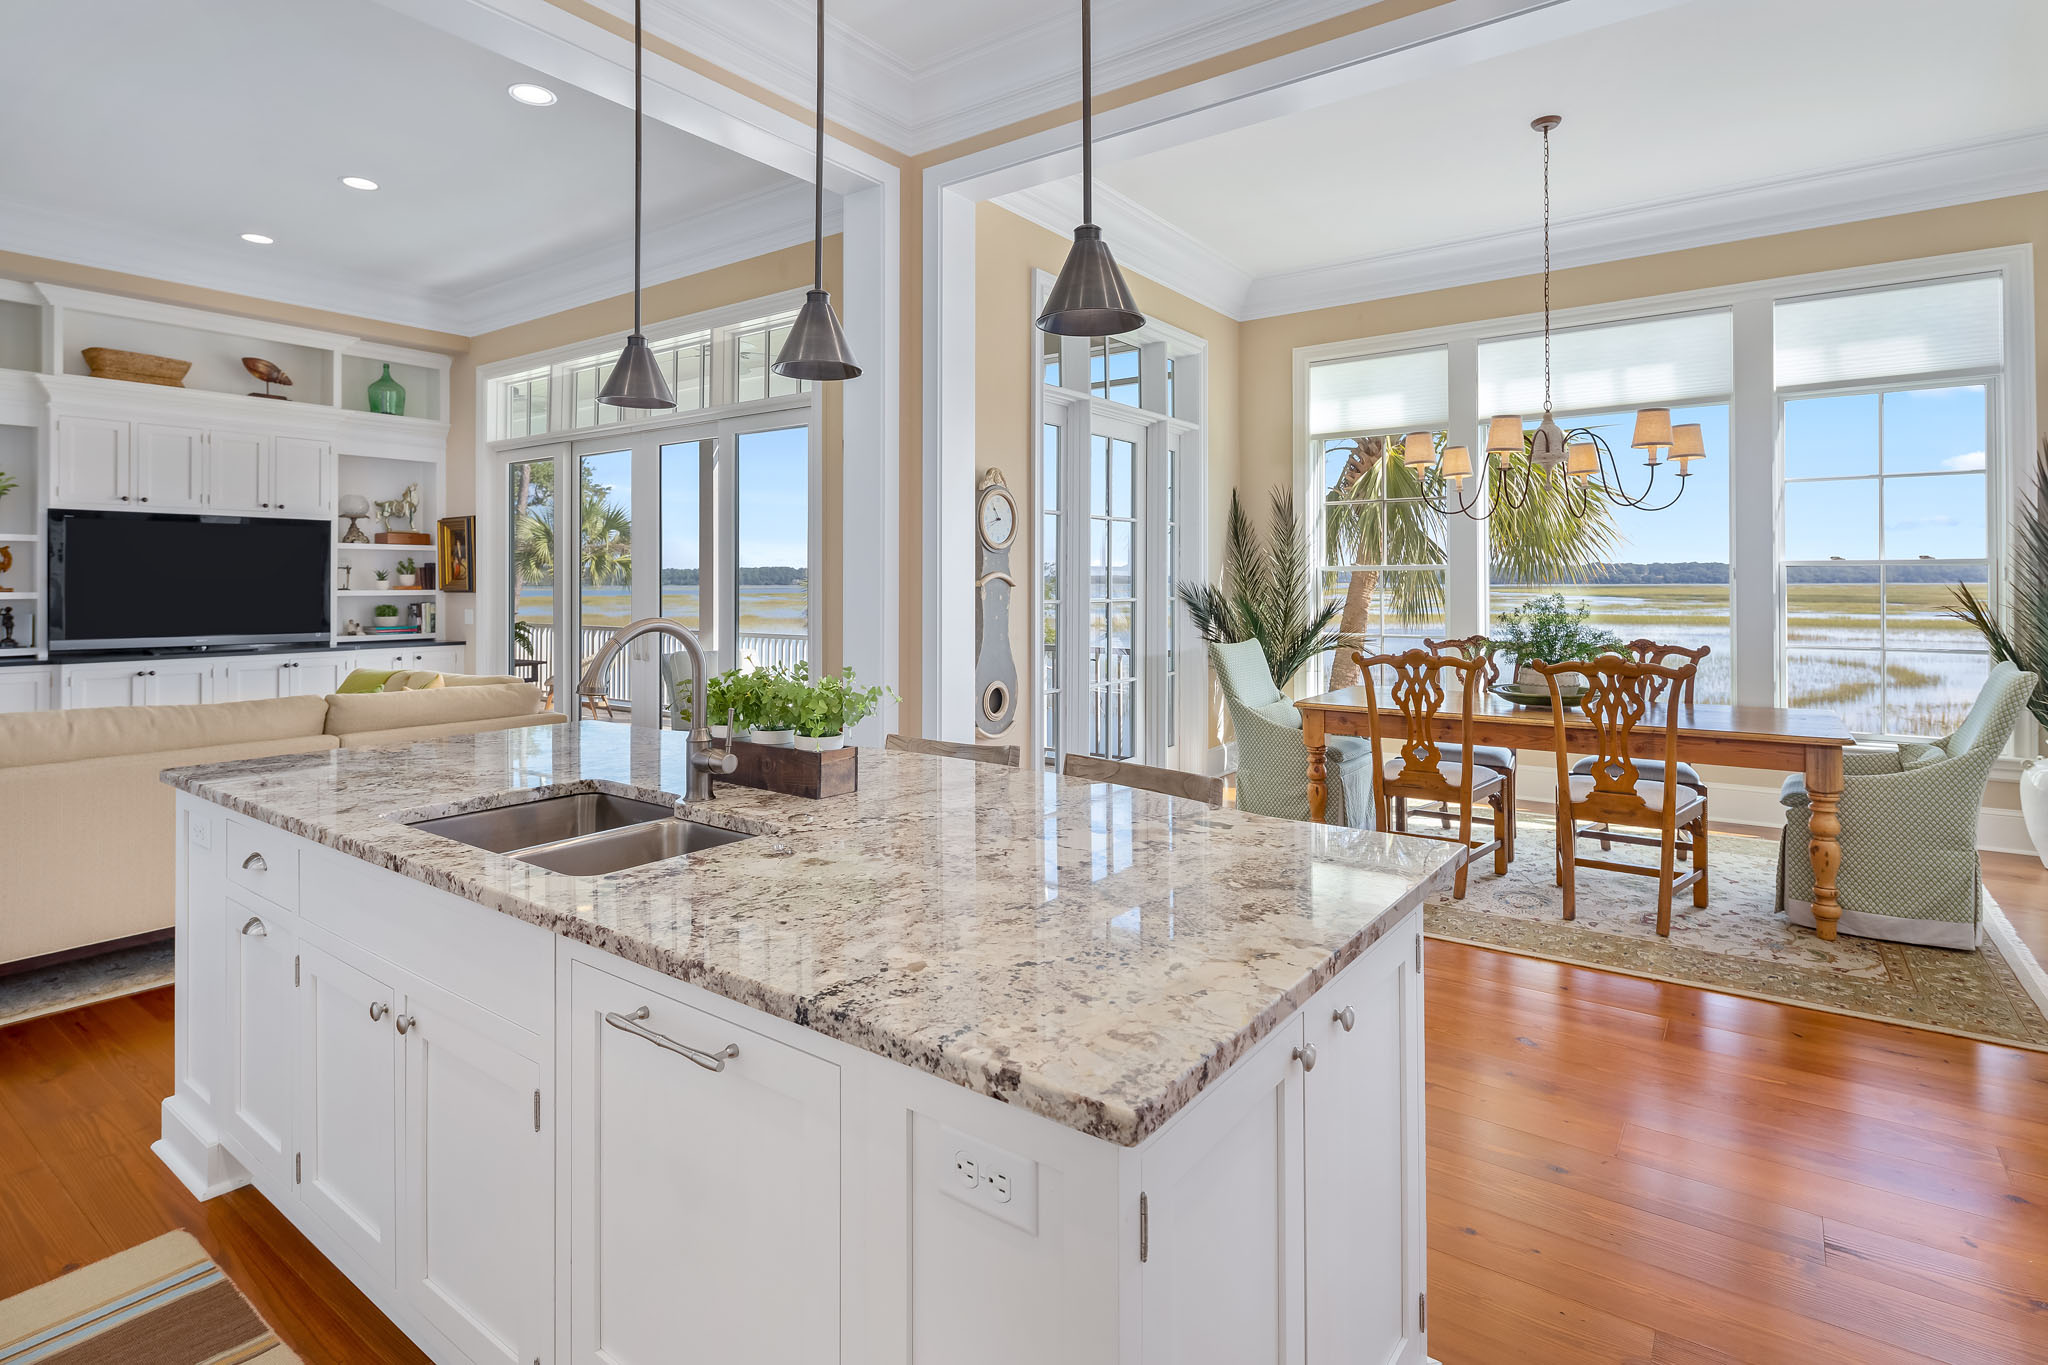 Open kitchen with granite island bar